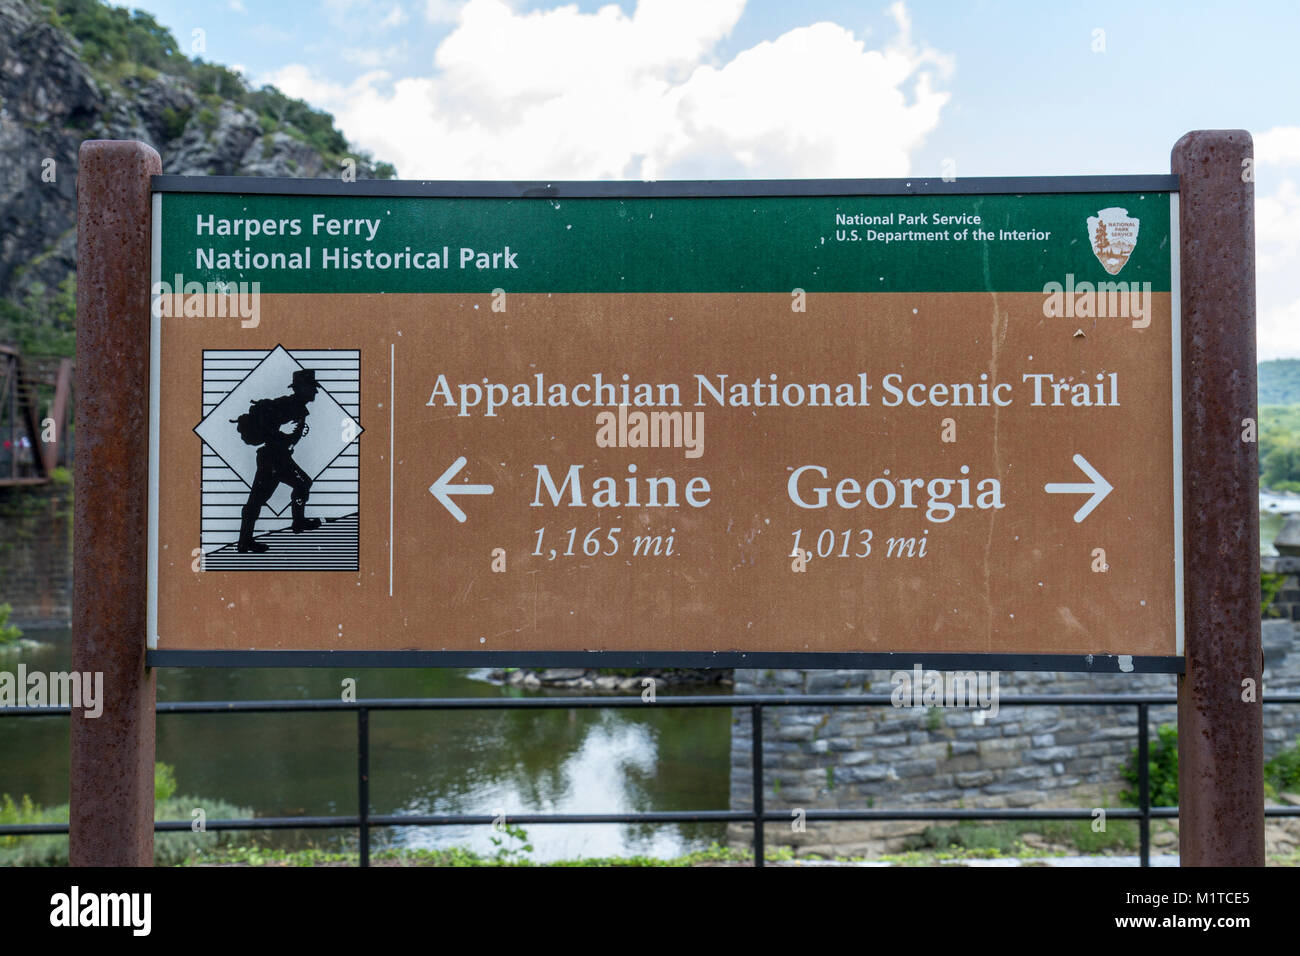 Appalachian National Scenic Trail National Park Service signo de Harpers Ferry, Virginia Occidental, Estados Unidos. Foto de stock